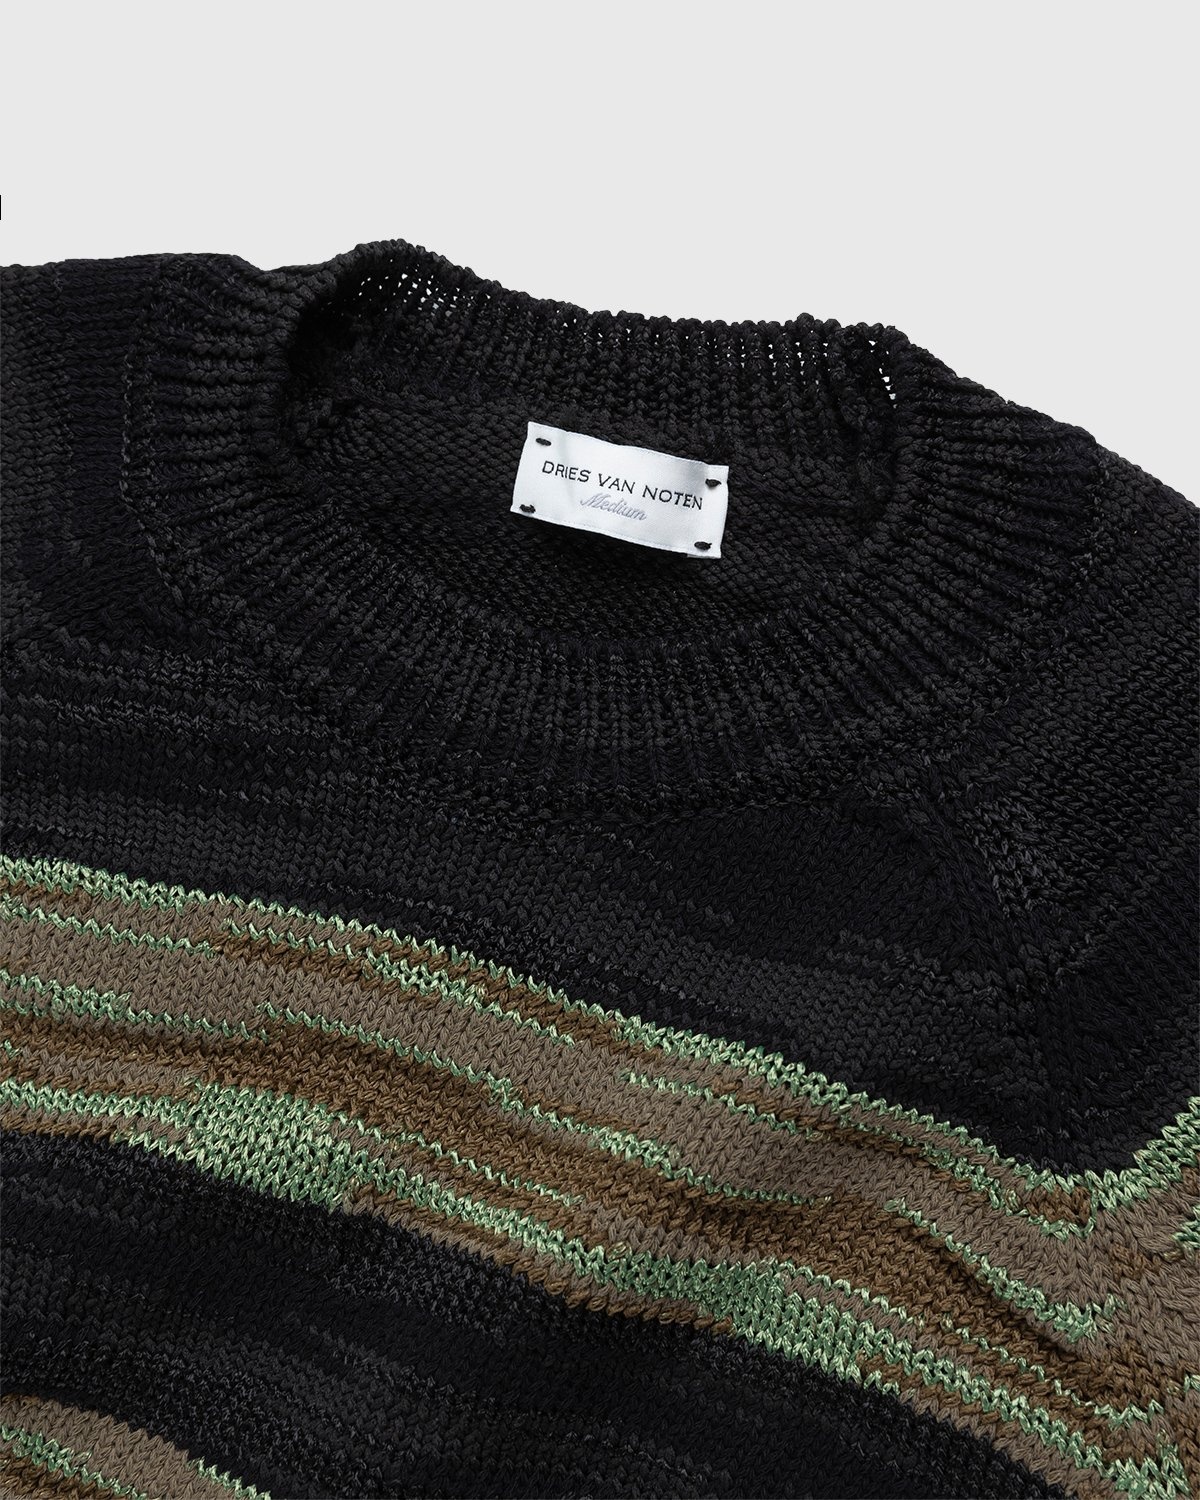 Dries van Noten – Janitor Intarsia Knit Sweater Black - Knitwear - Black - Image 5